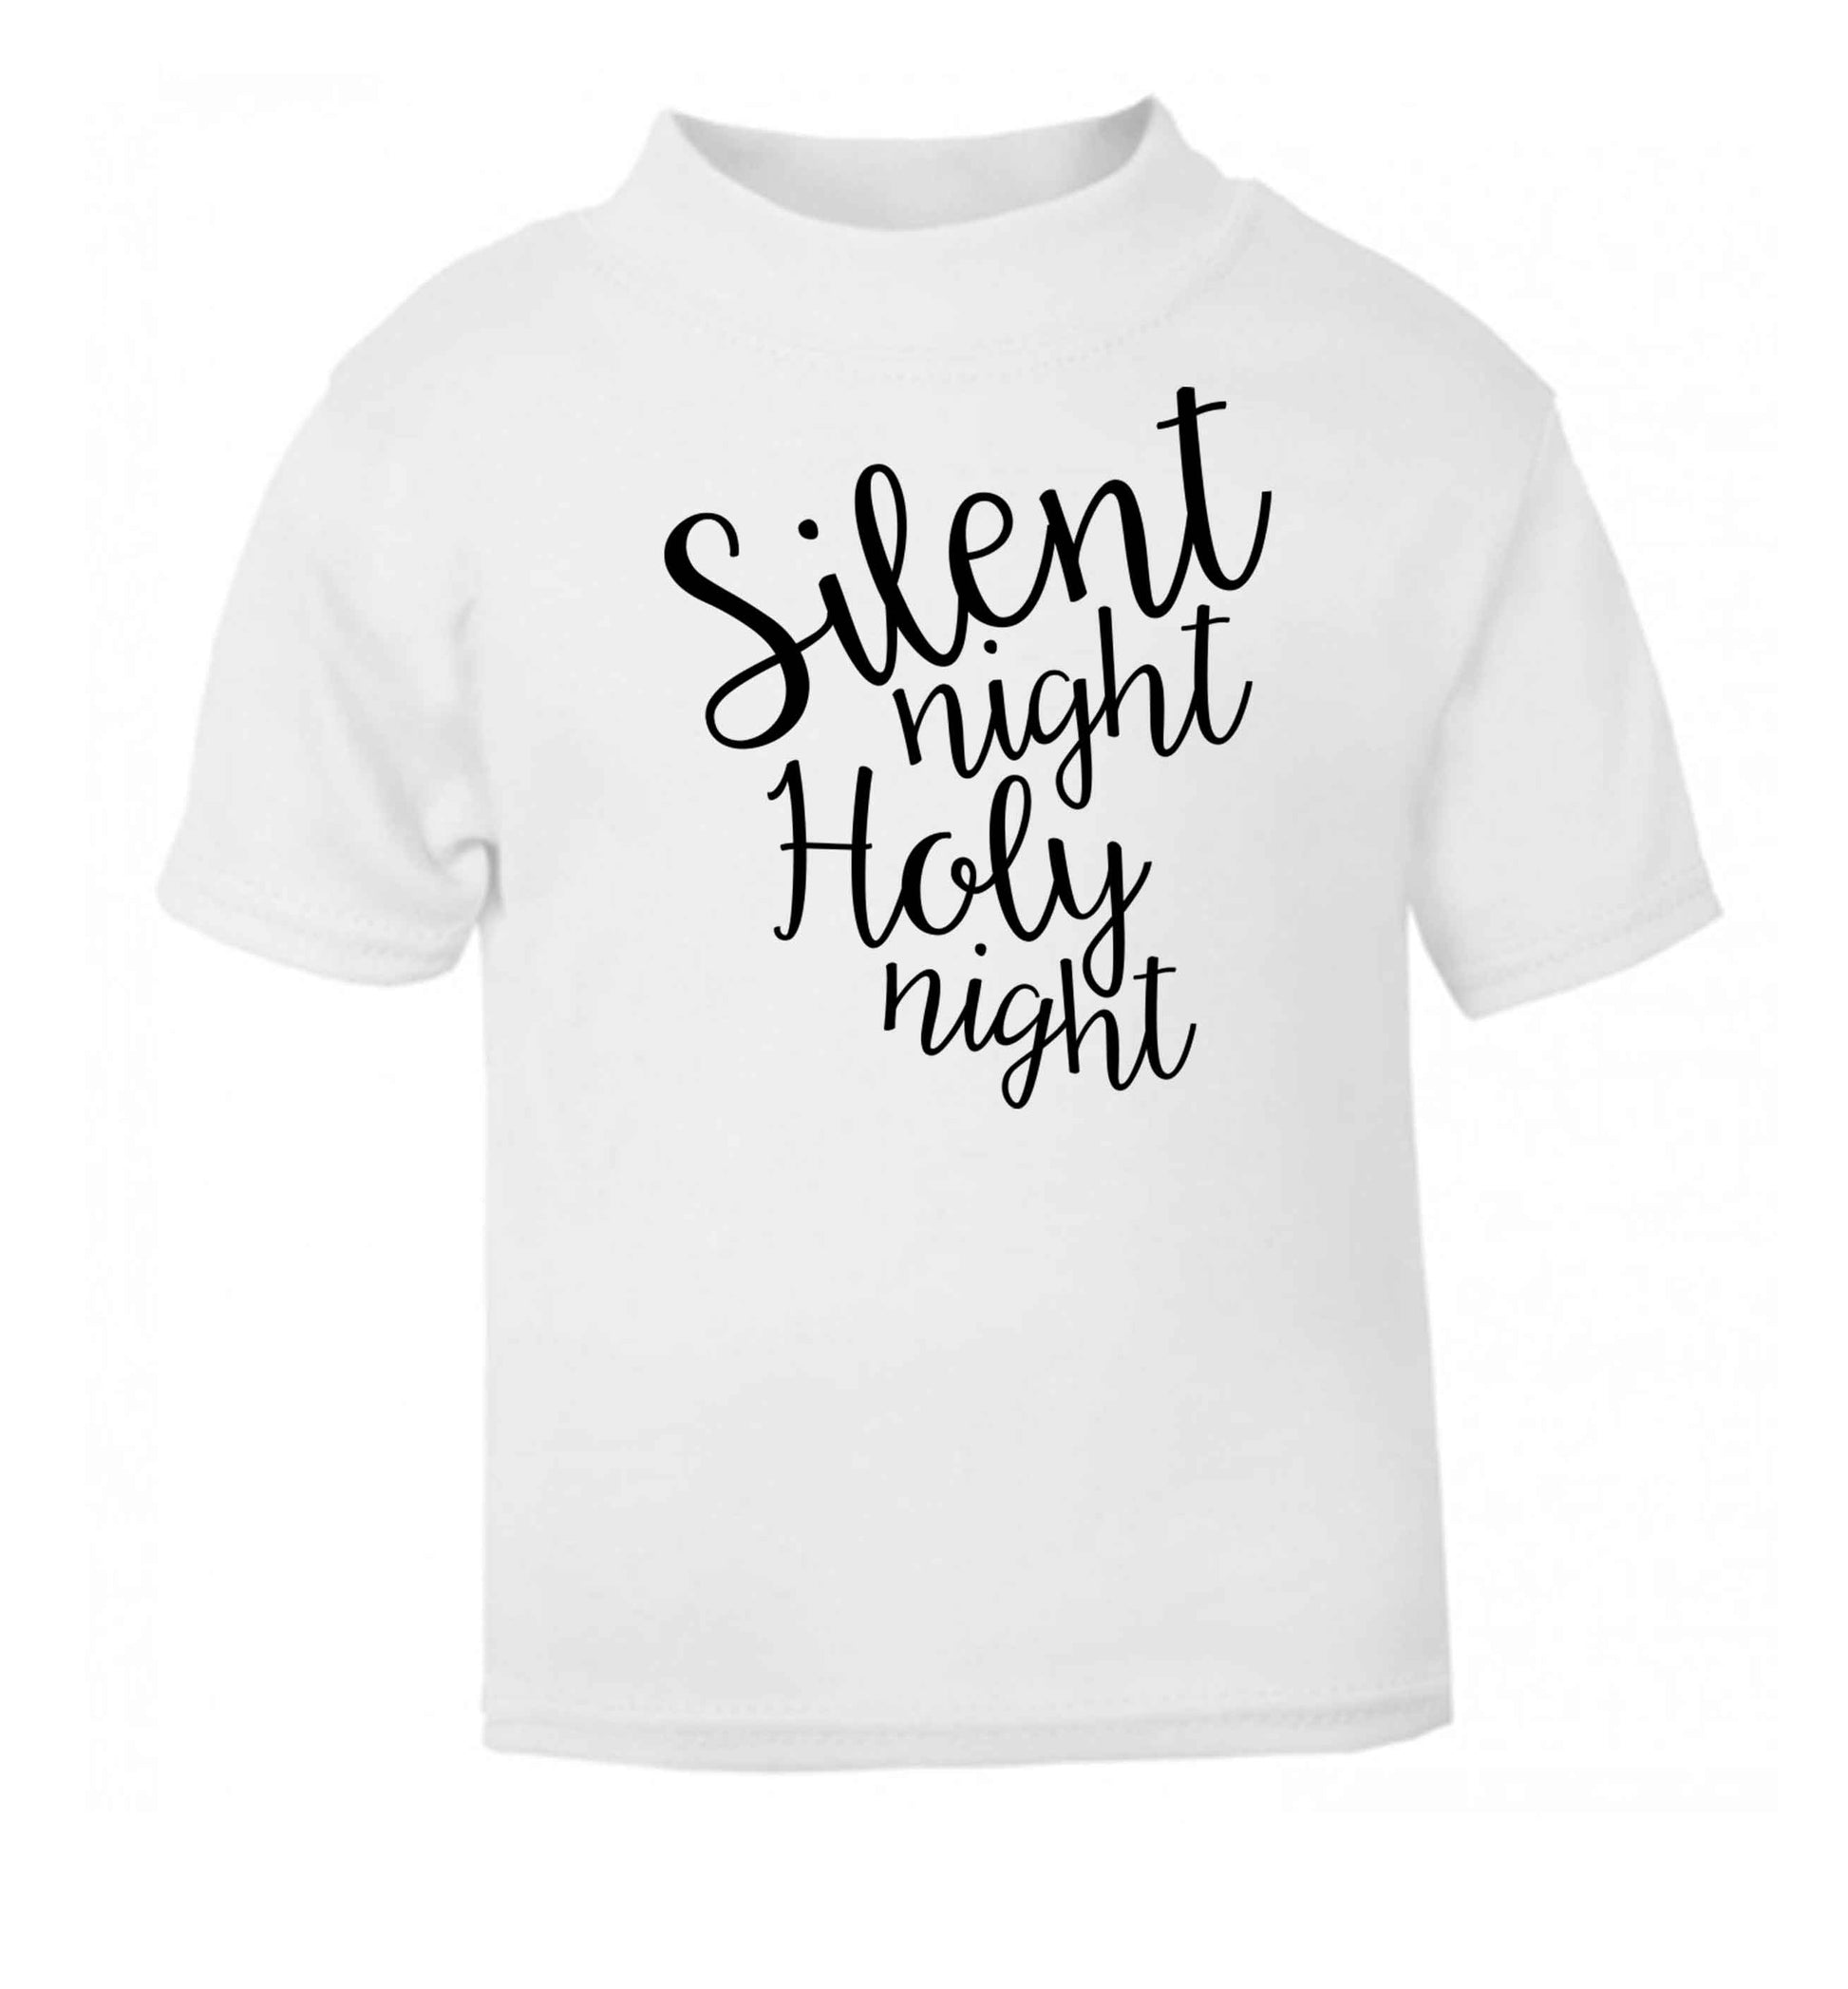 Silent night holy night white baby toddler Tshirt 2 Years